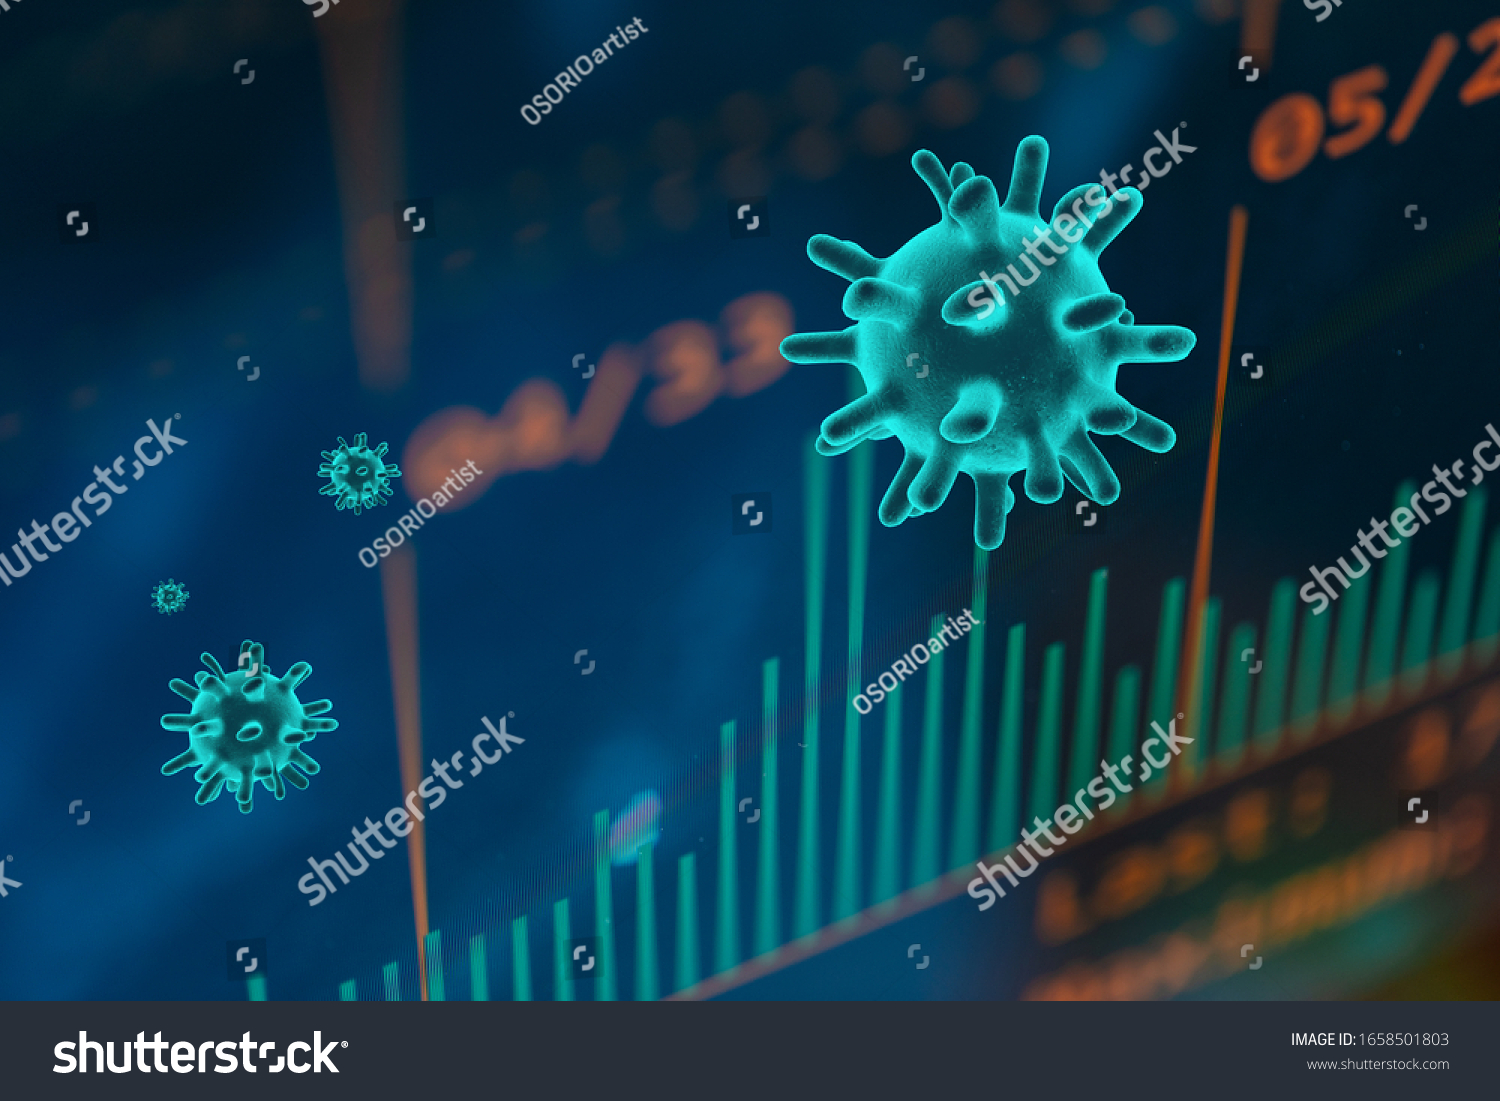 Graphs representing the stock market crash caused by the Coronavirus #1658501803